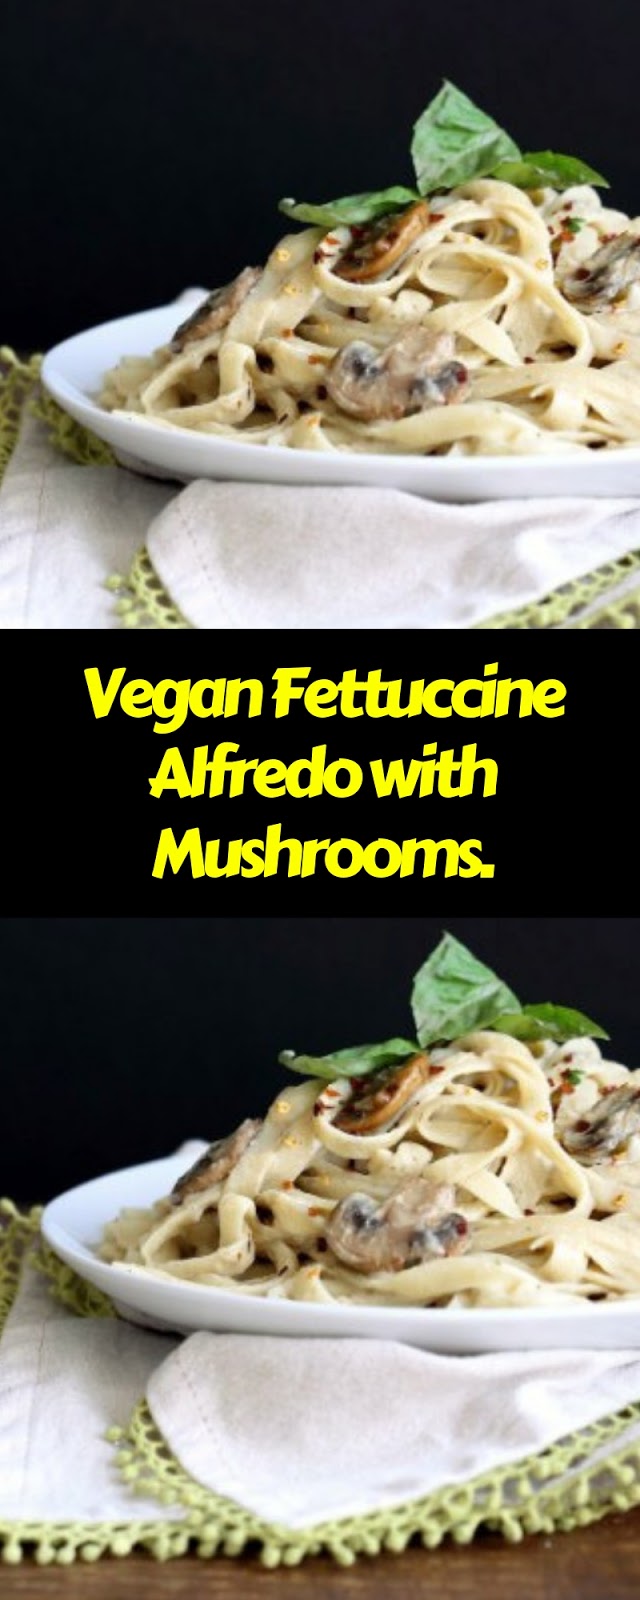 Vegan Fettuccine Alfredo with Mushrooms